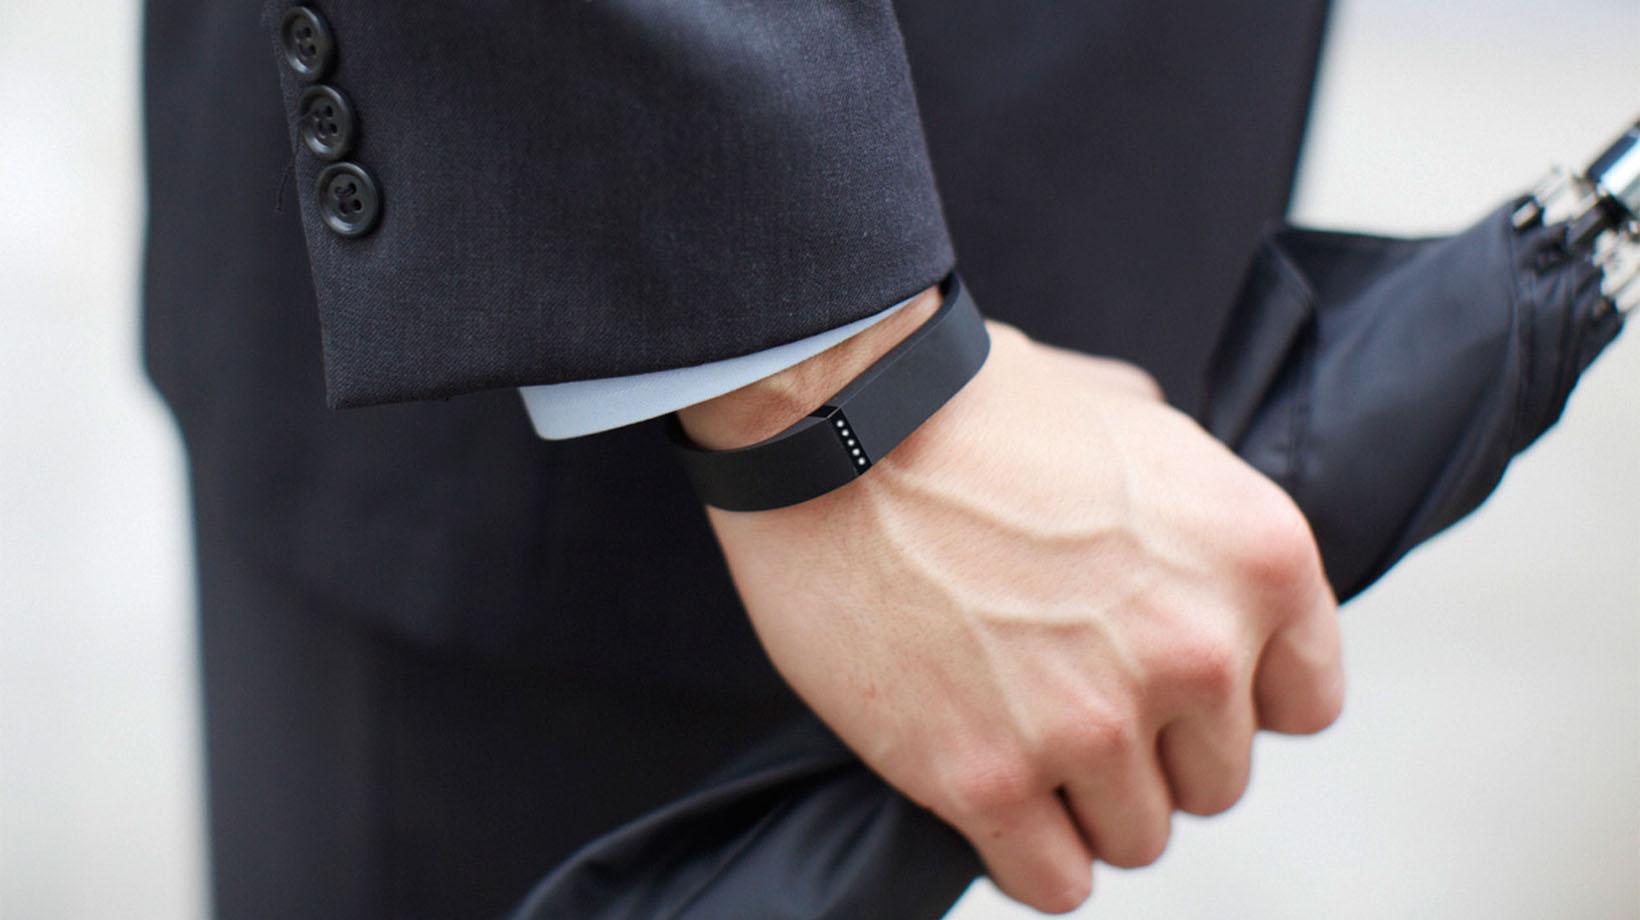 Black Fitbit Wireless Activity and Sleep Tracker Wristband Flex 